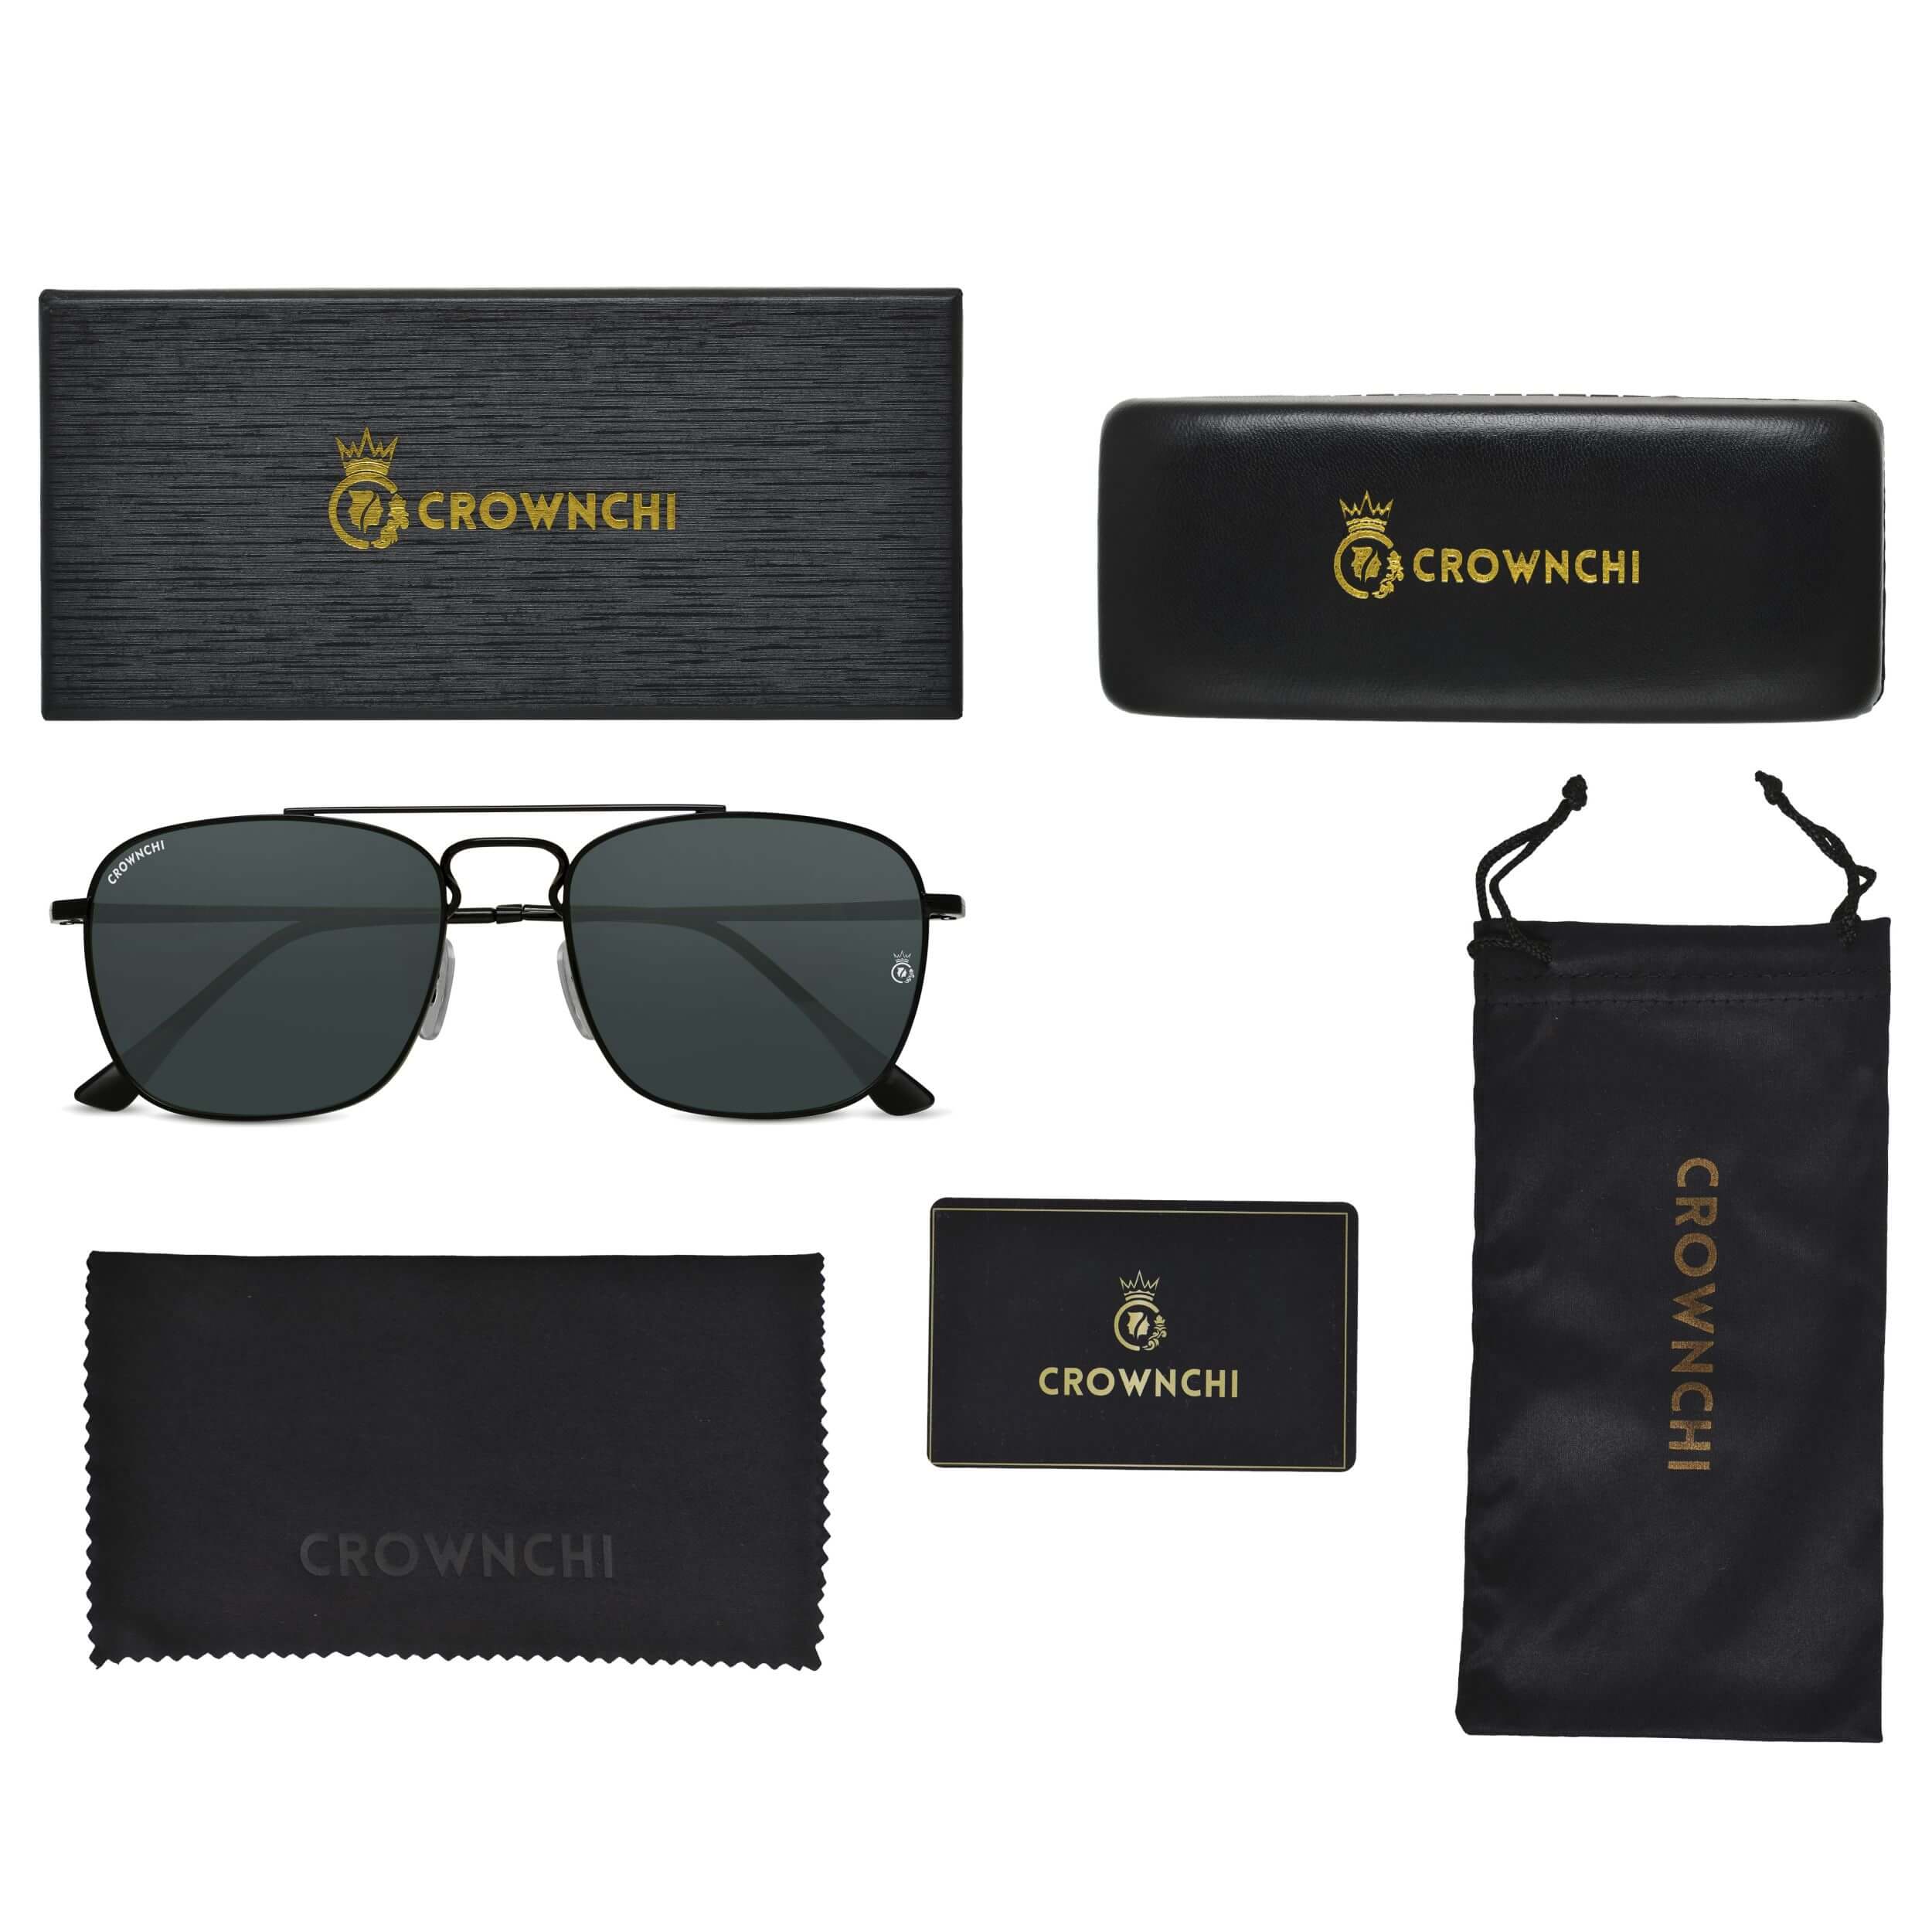 Denver Black Square Edition Sunglasses